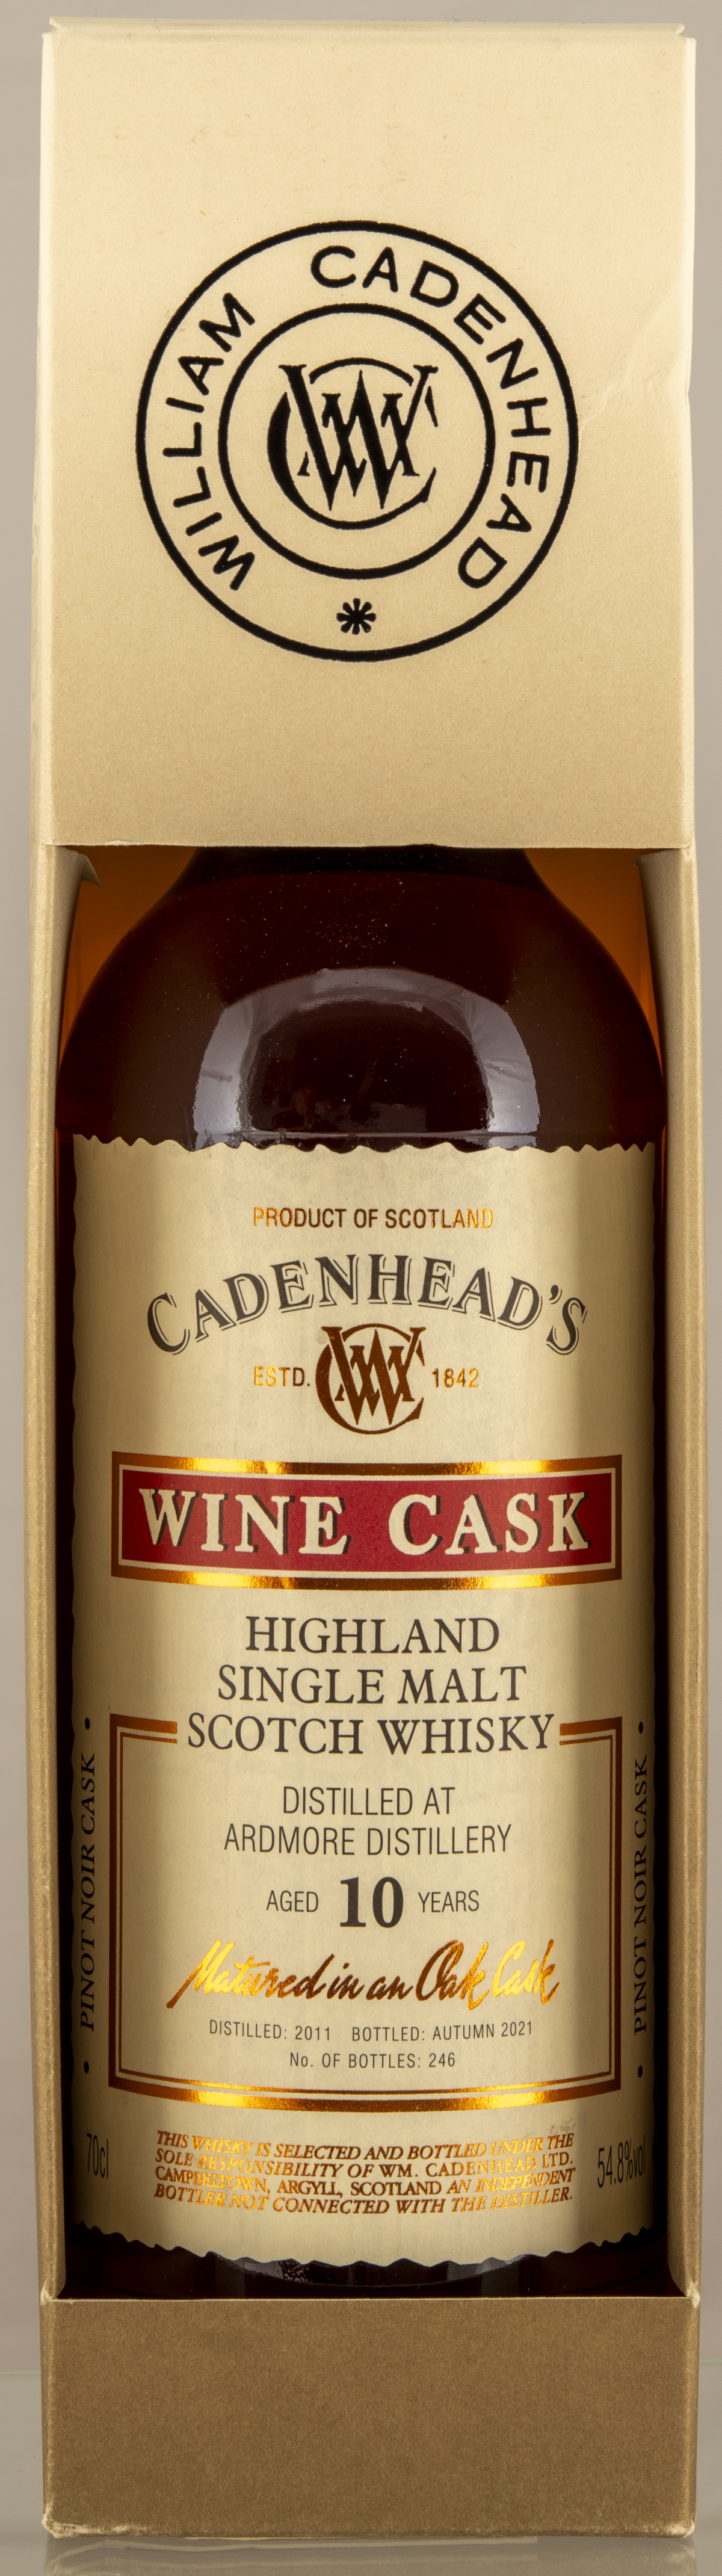 Billede: D85_8377 - Cadenheads Wine Cask Ardmore 10 - box front.jpg